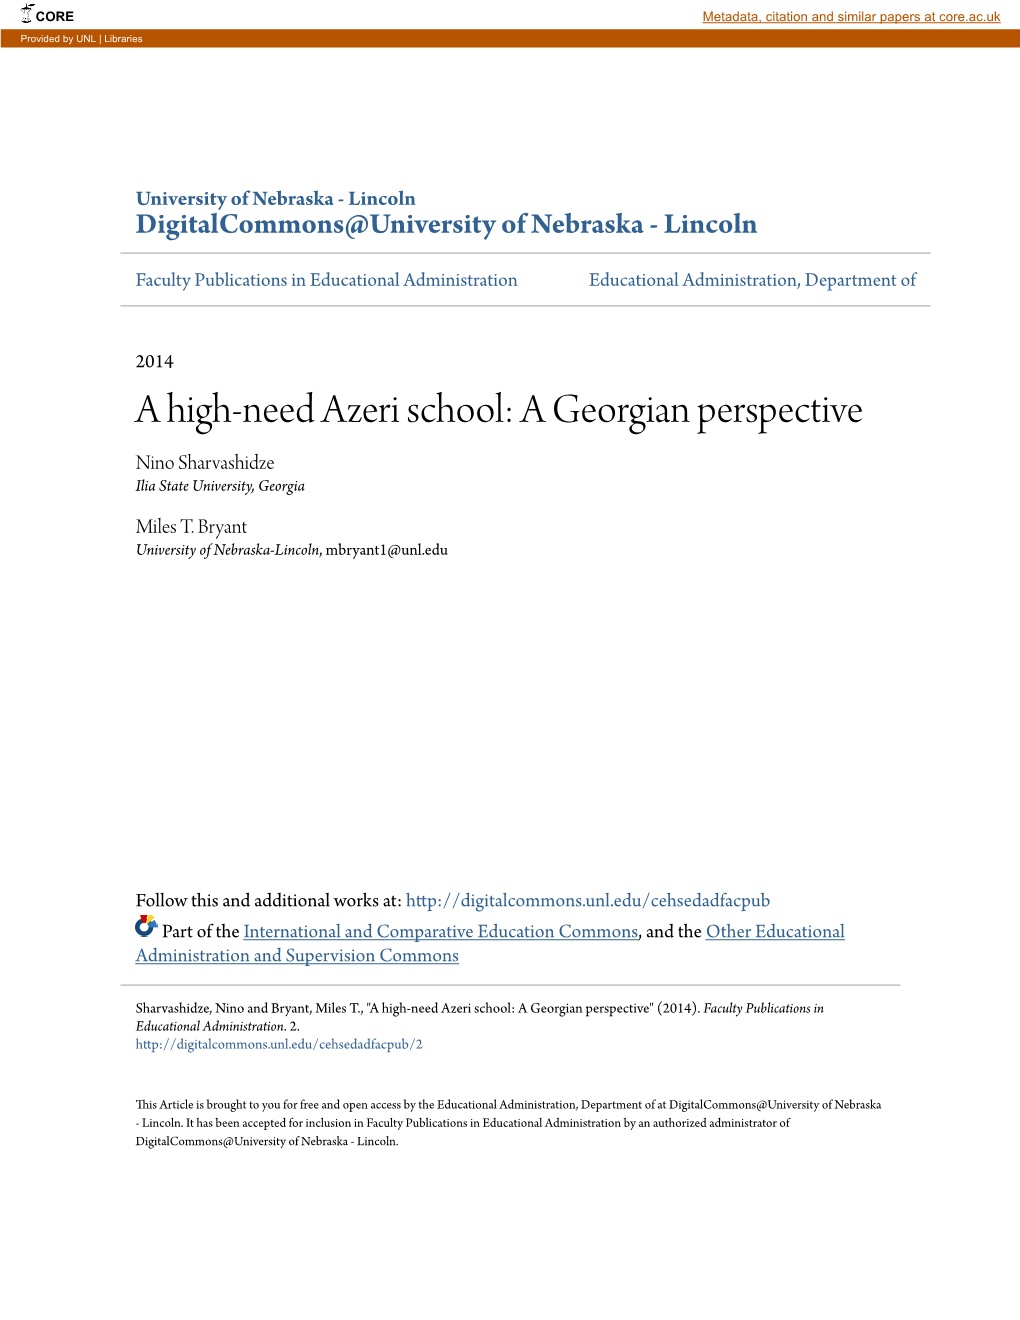 A High-Need Azeri School: a Georgian Perspective Nino Sharvashidze Ilia State University, Georgia